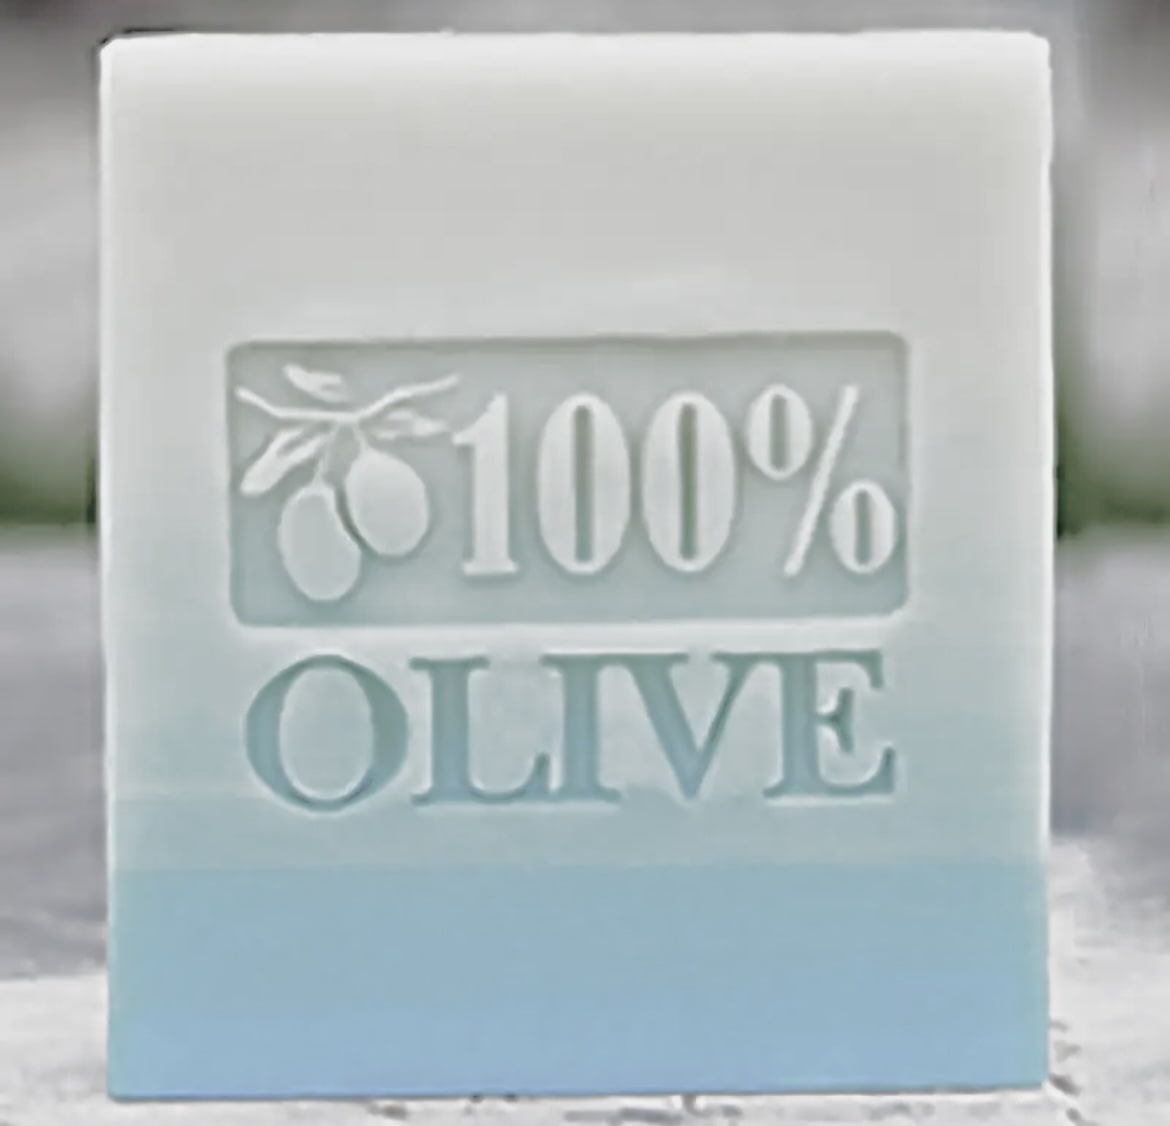 Seifenstempel Acrylglas transparent gross 100% Olive